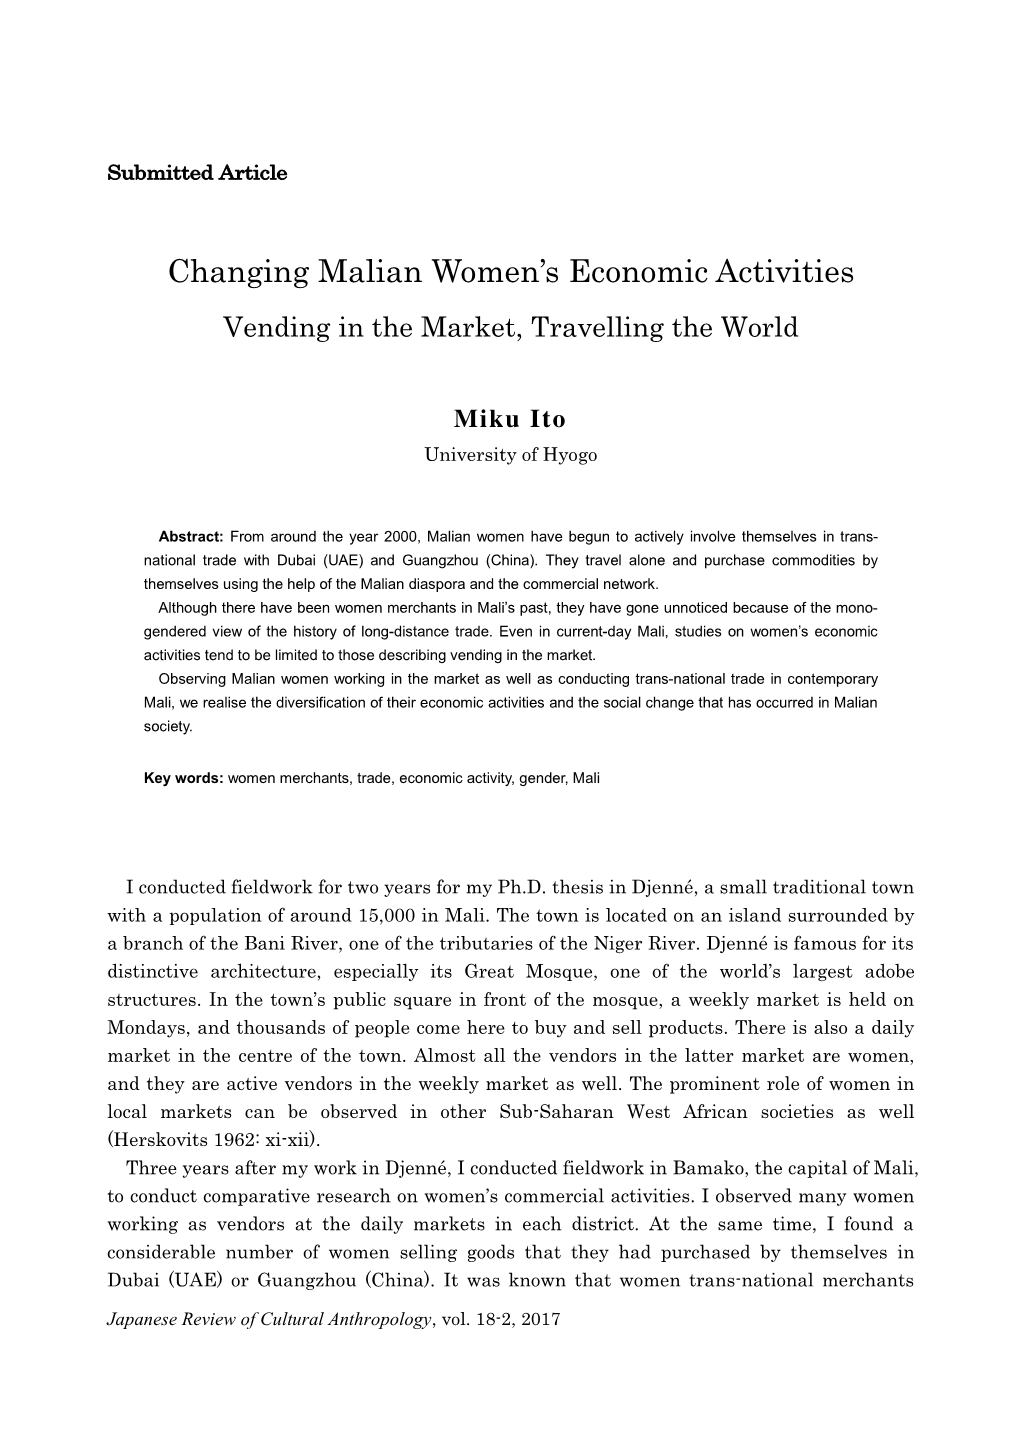 Changing Malian Women's Economic Activities